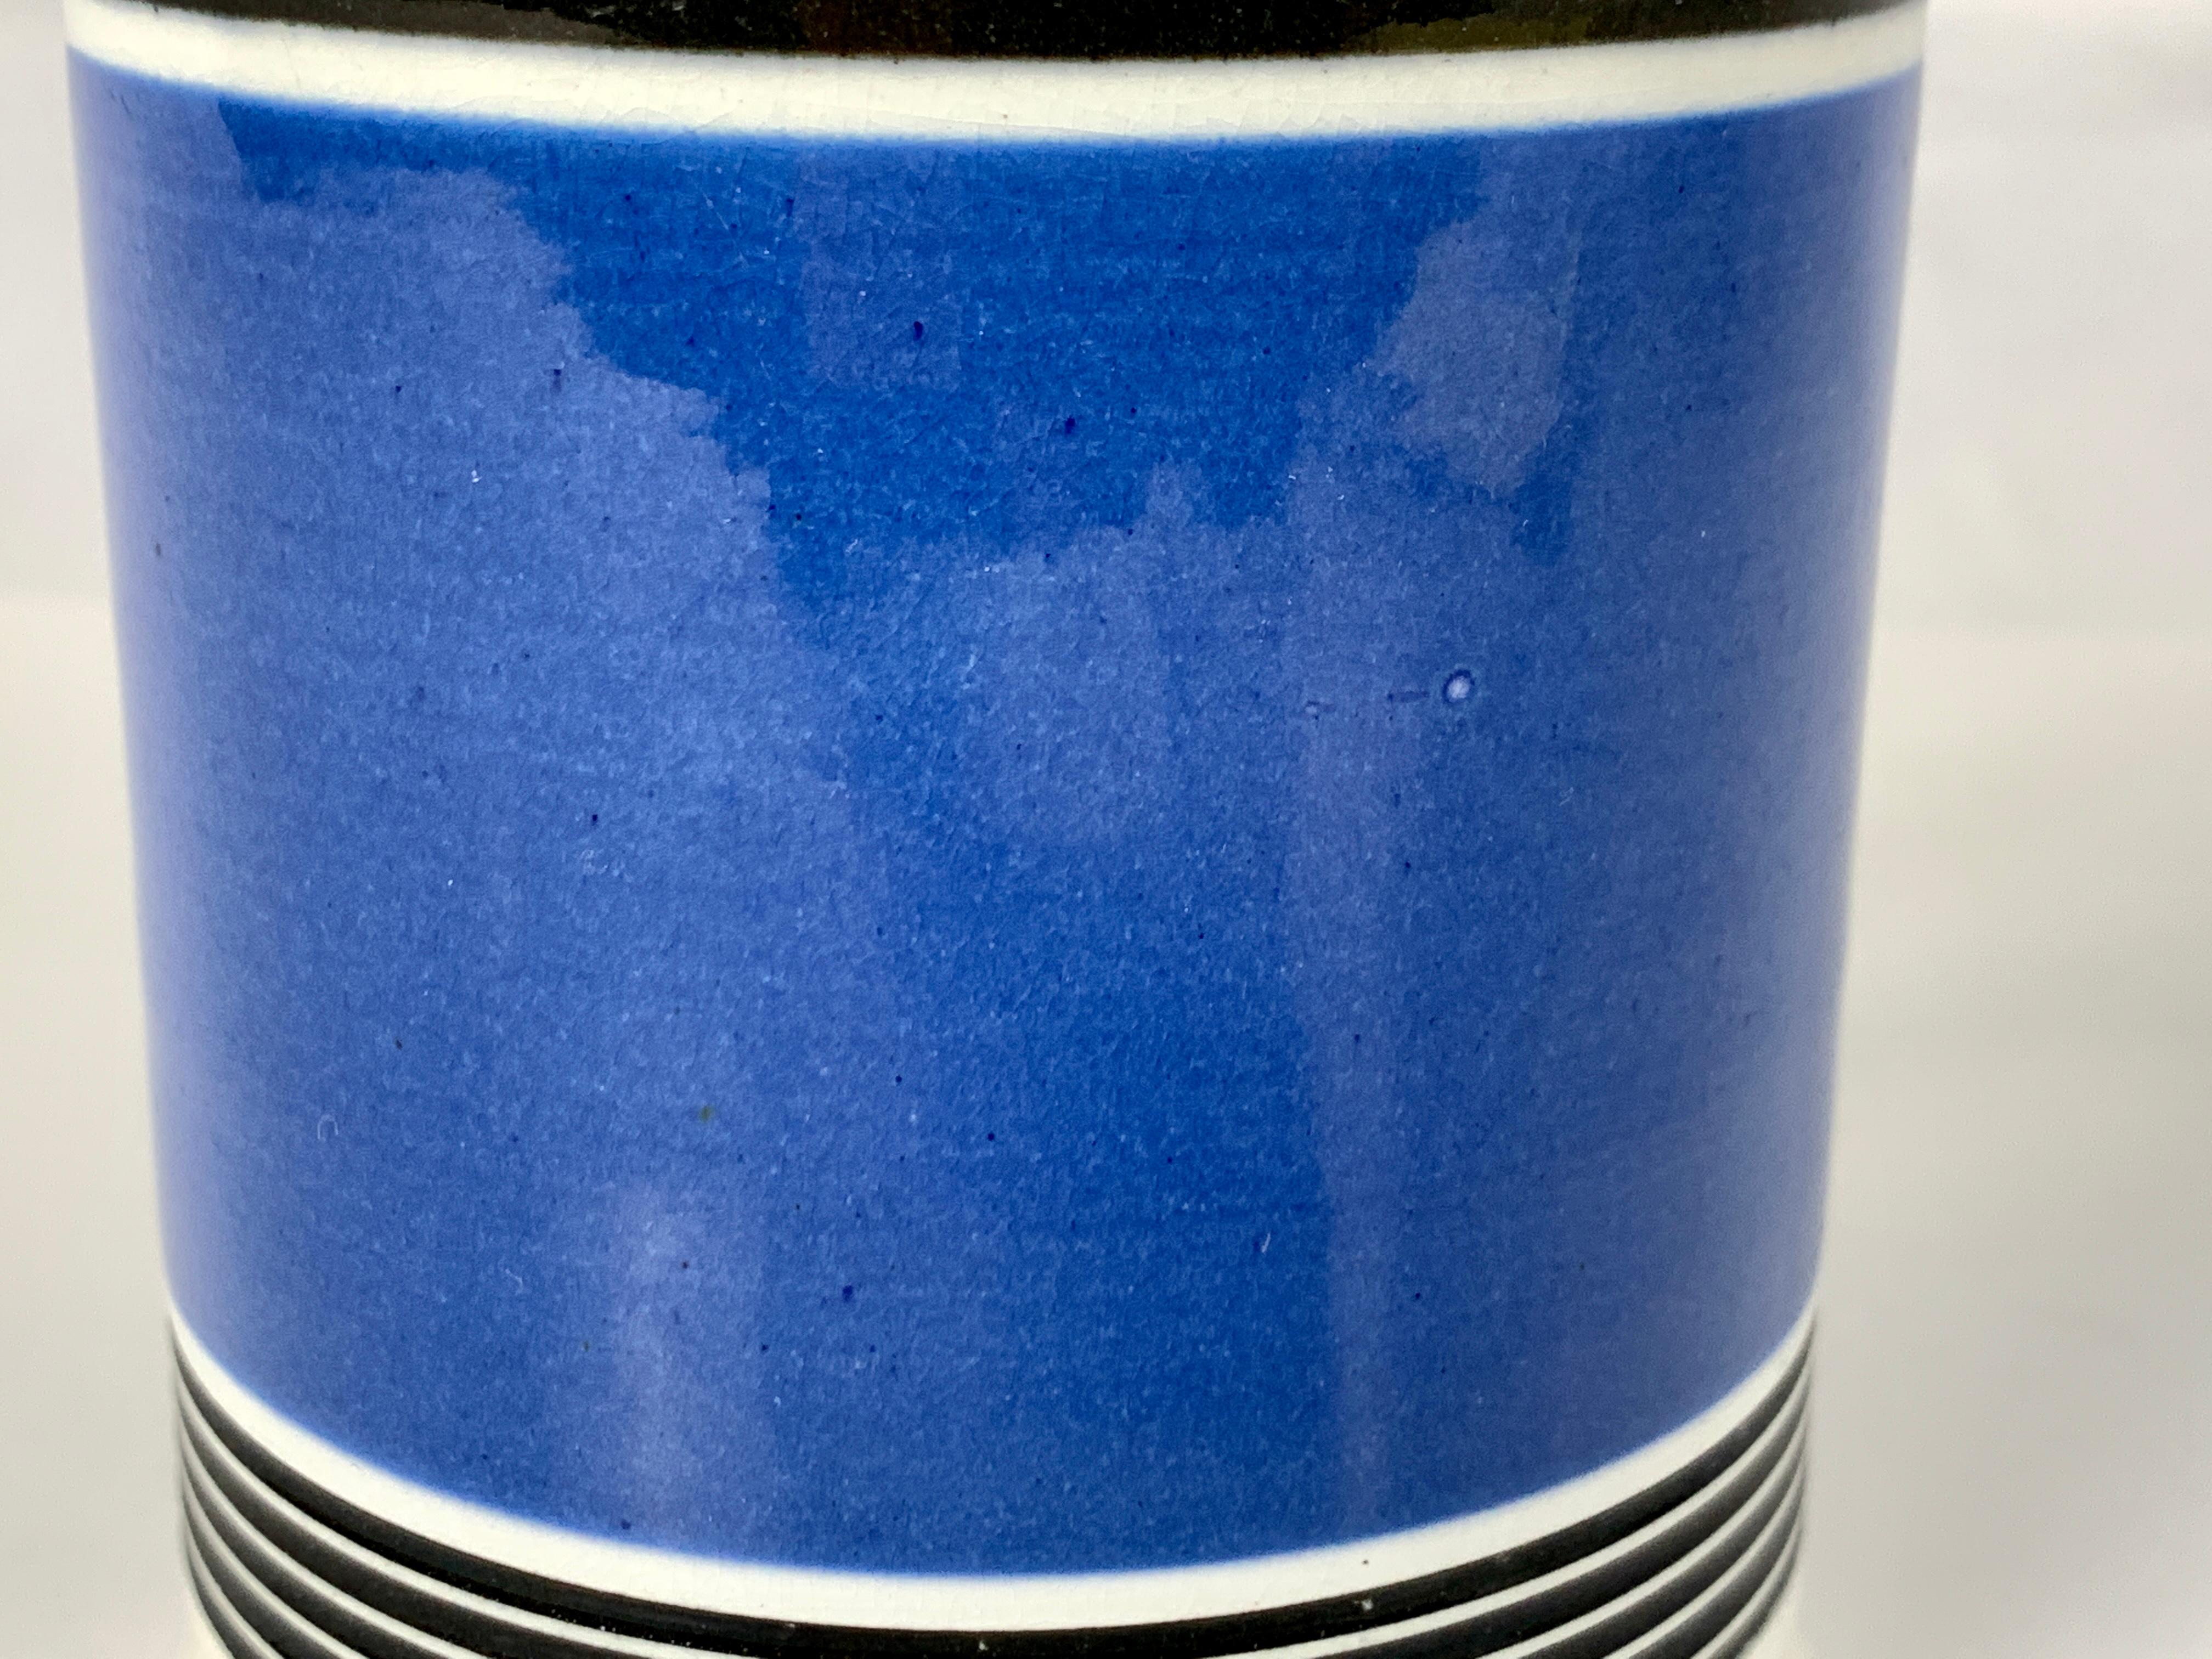 Country Mochaware Mug with Royal Blue Slip and Black Geometric Designs Made England